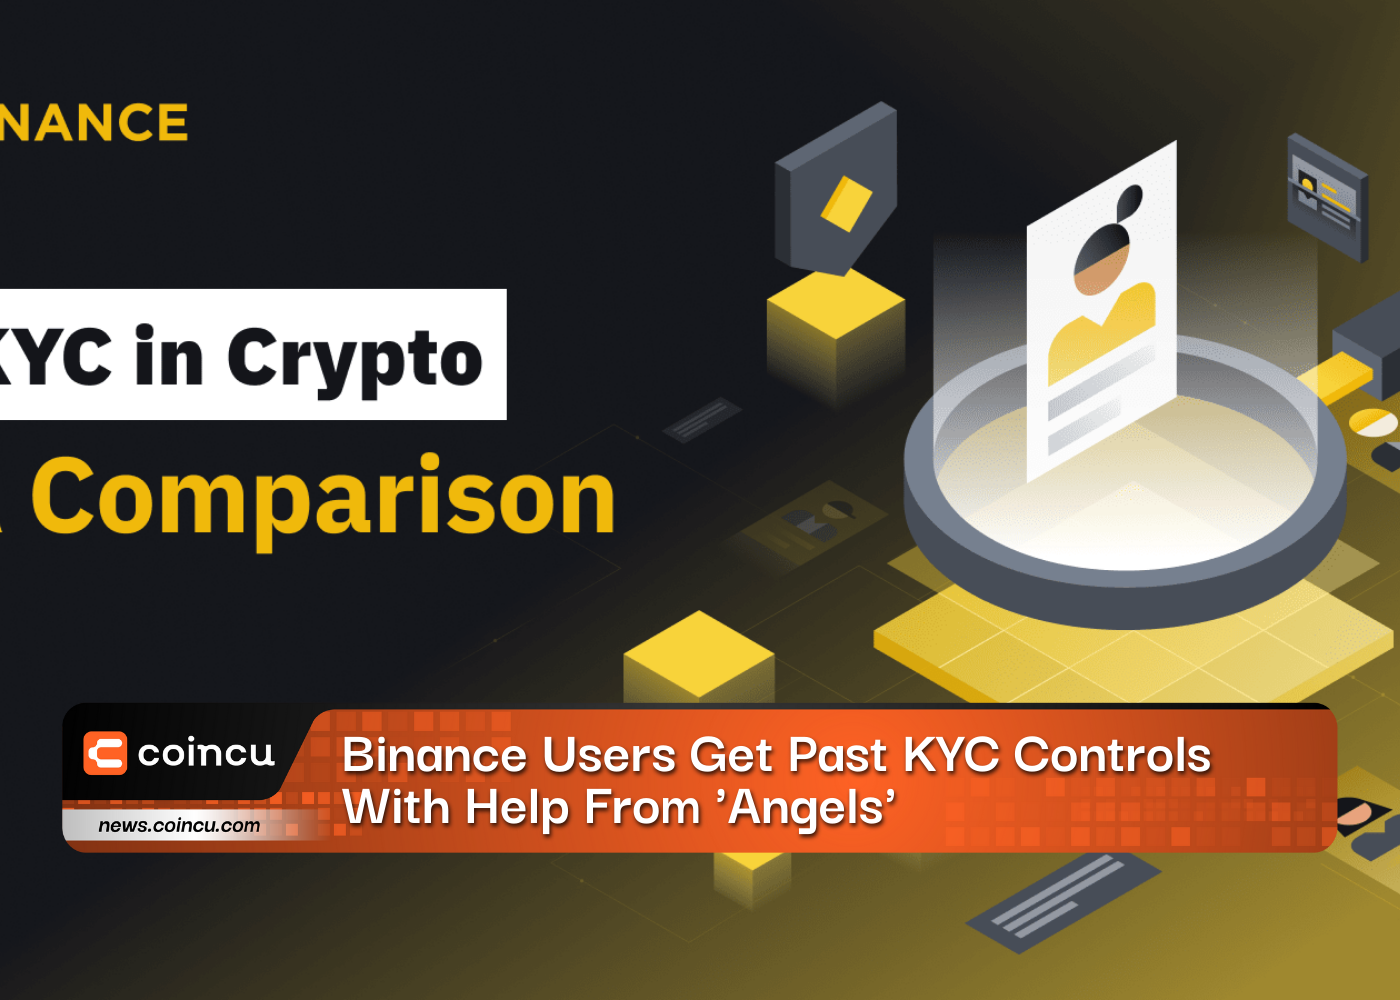 Binance Users Get Past KYC Controls